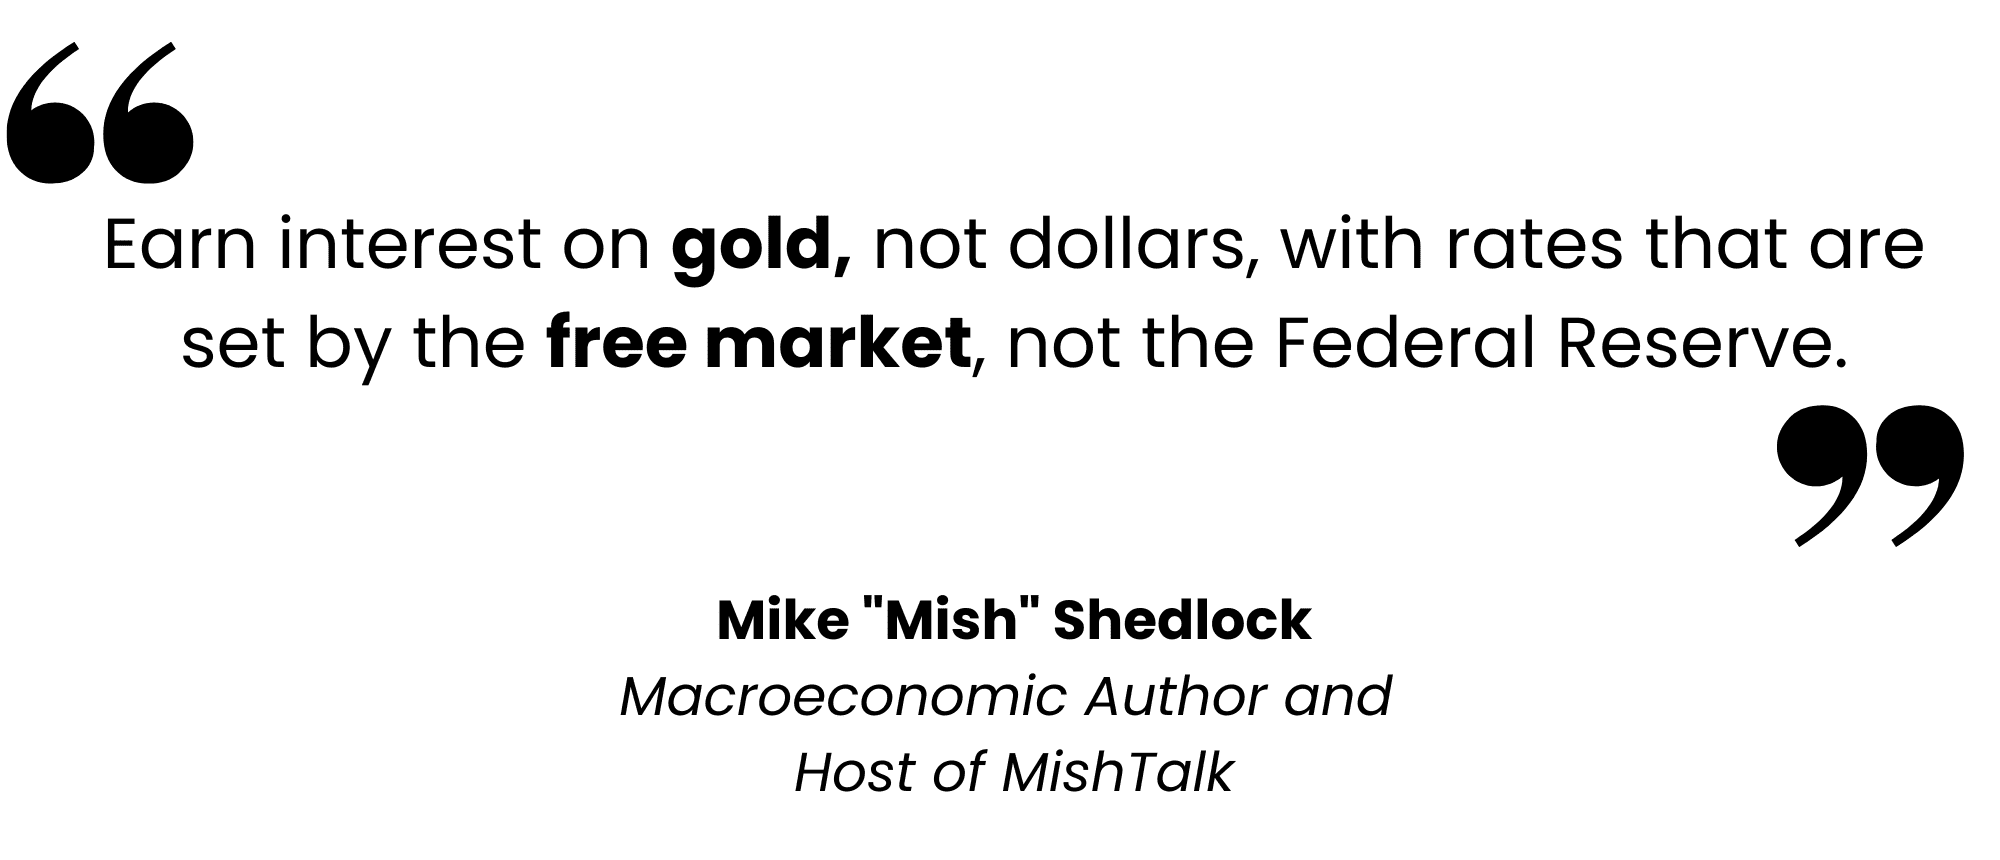 Mish Shedlock, earn interest on gold, not dollars.